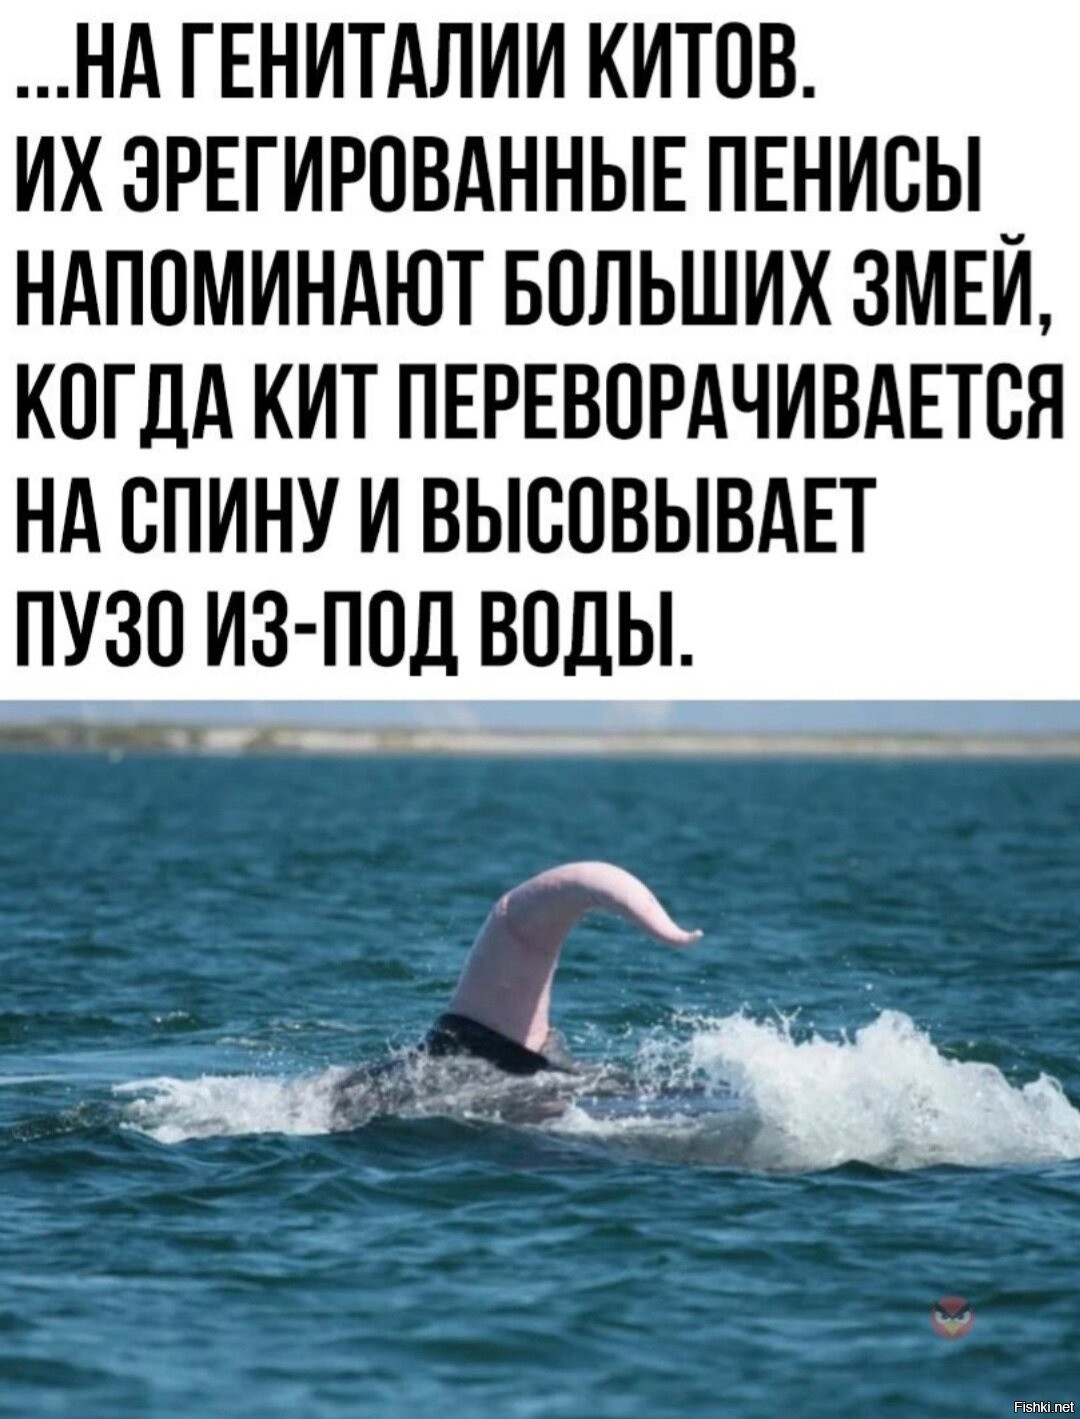 сколько в длину член кита фото 38